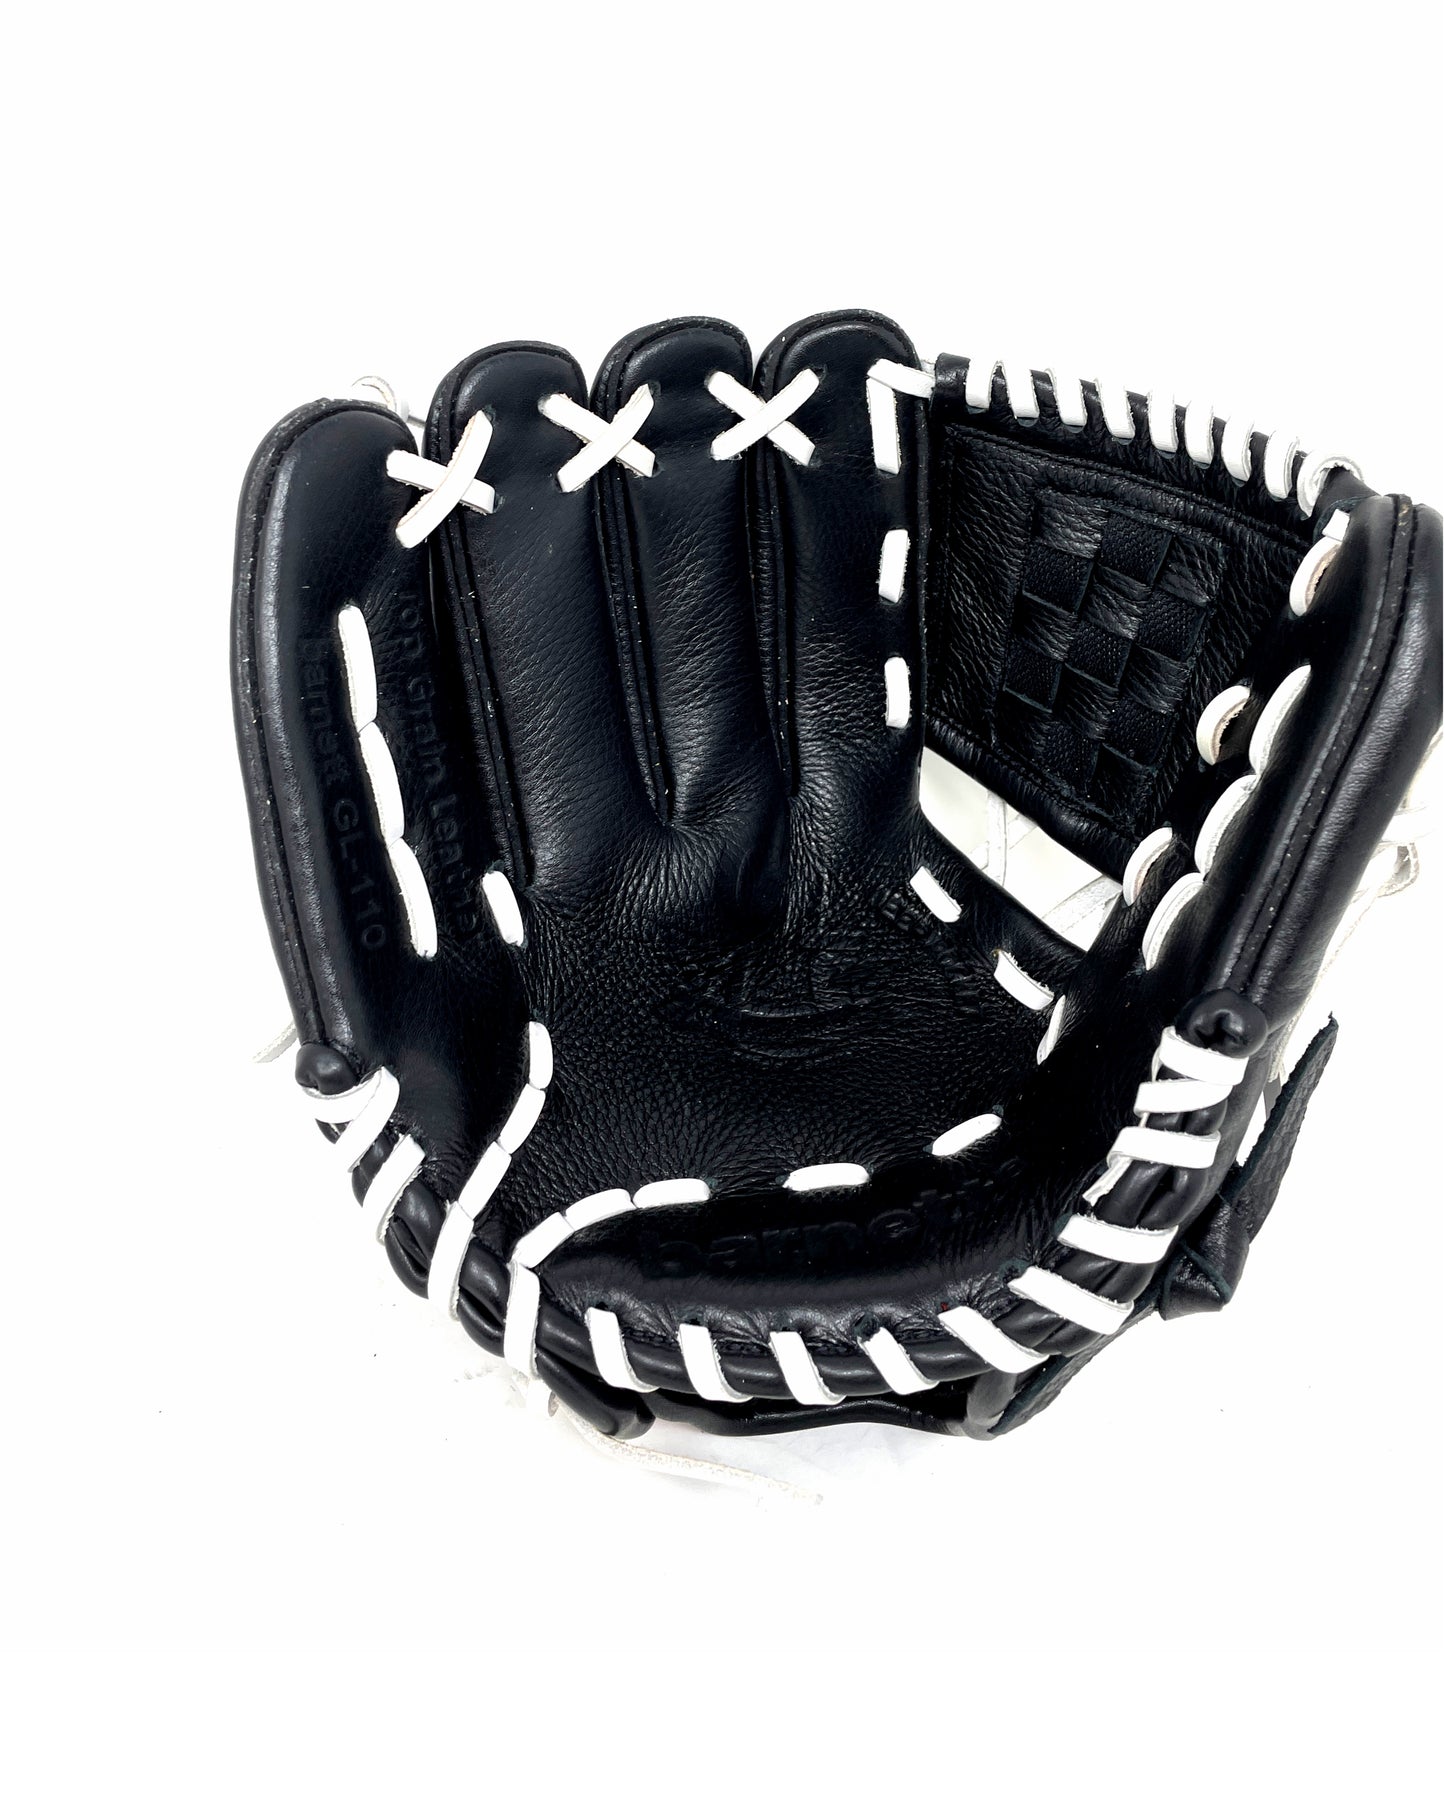 GL-110 Baseball Handschuh, Echtleder, Wettkampf, Infield Größe 11 (inch), schwarz